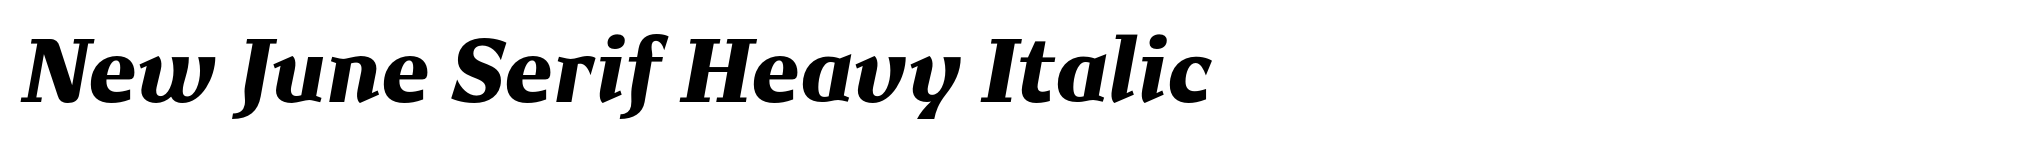 New June Serif Heavy Italic image